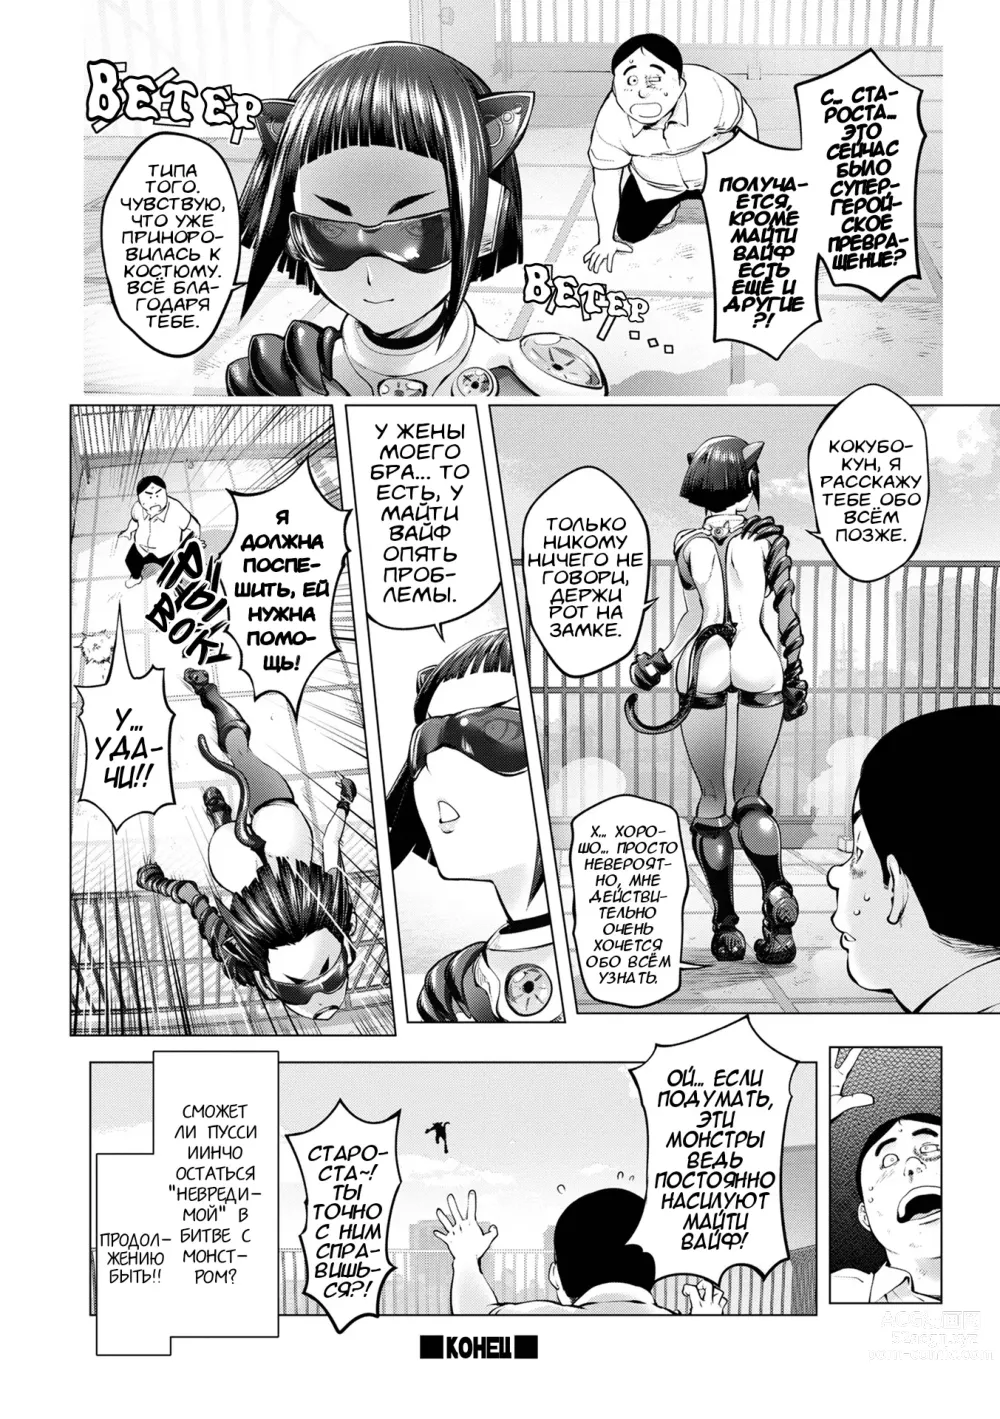 Page 20 of manga Пусси Иинчо